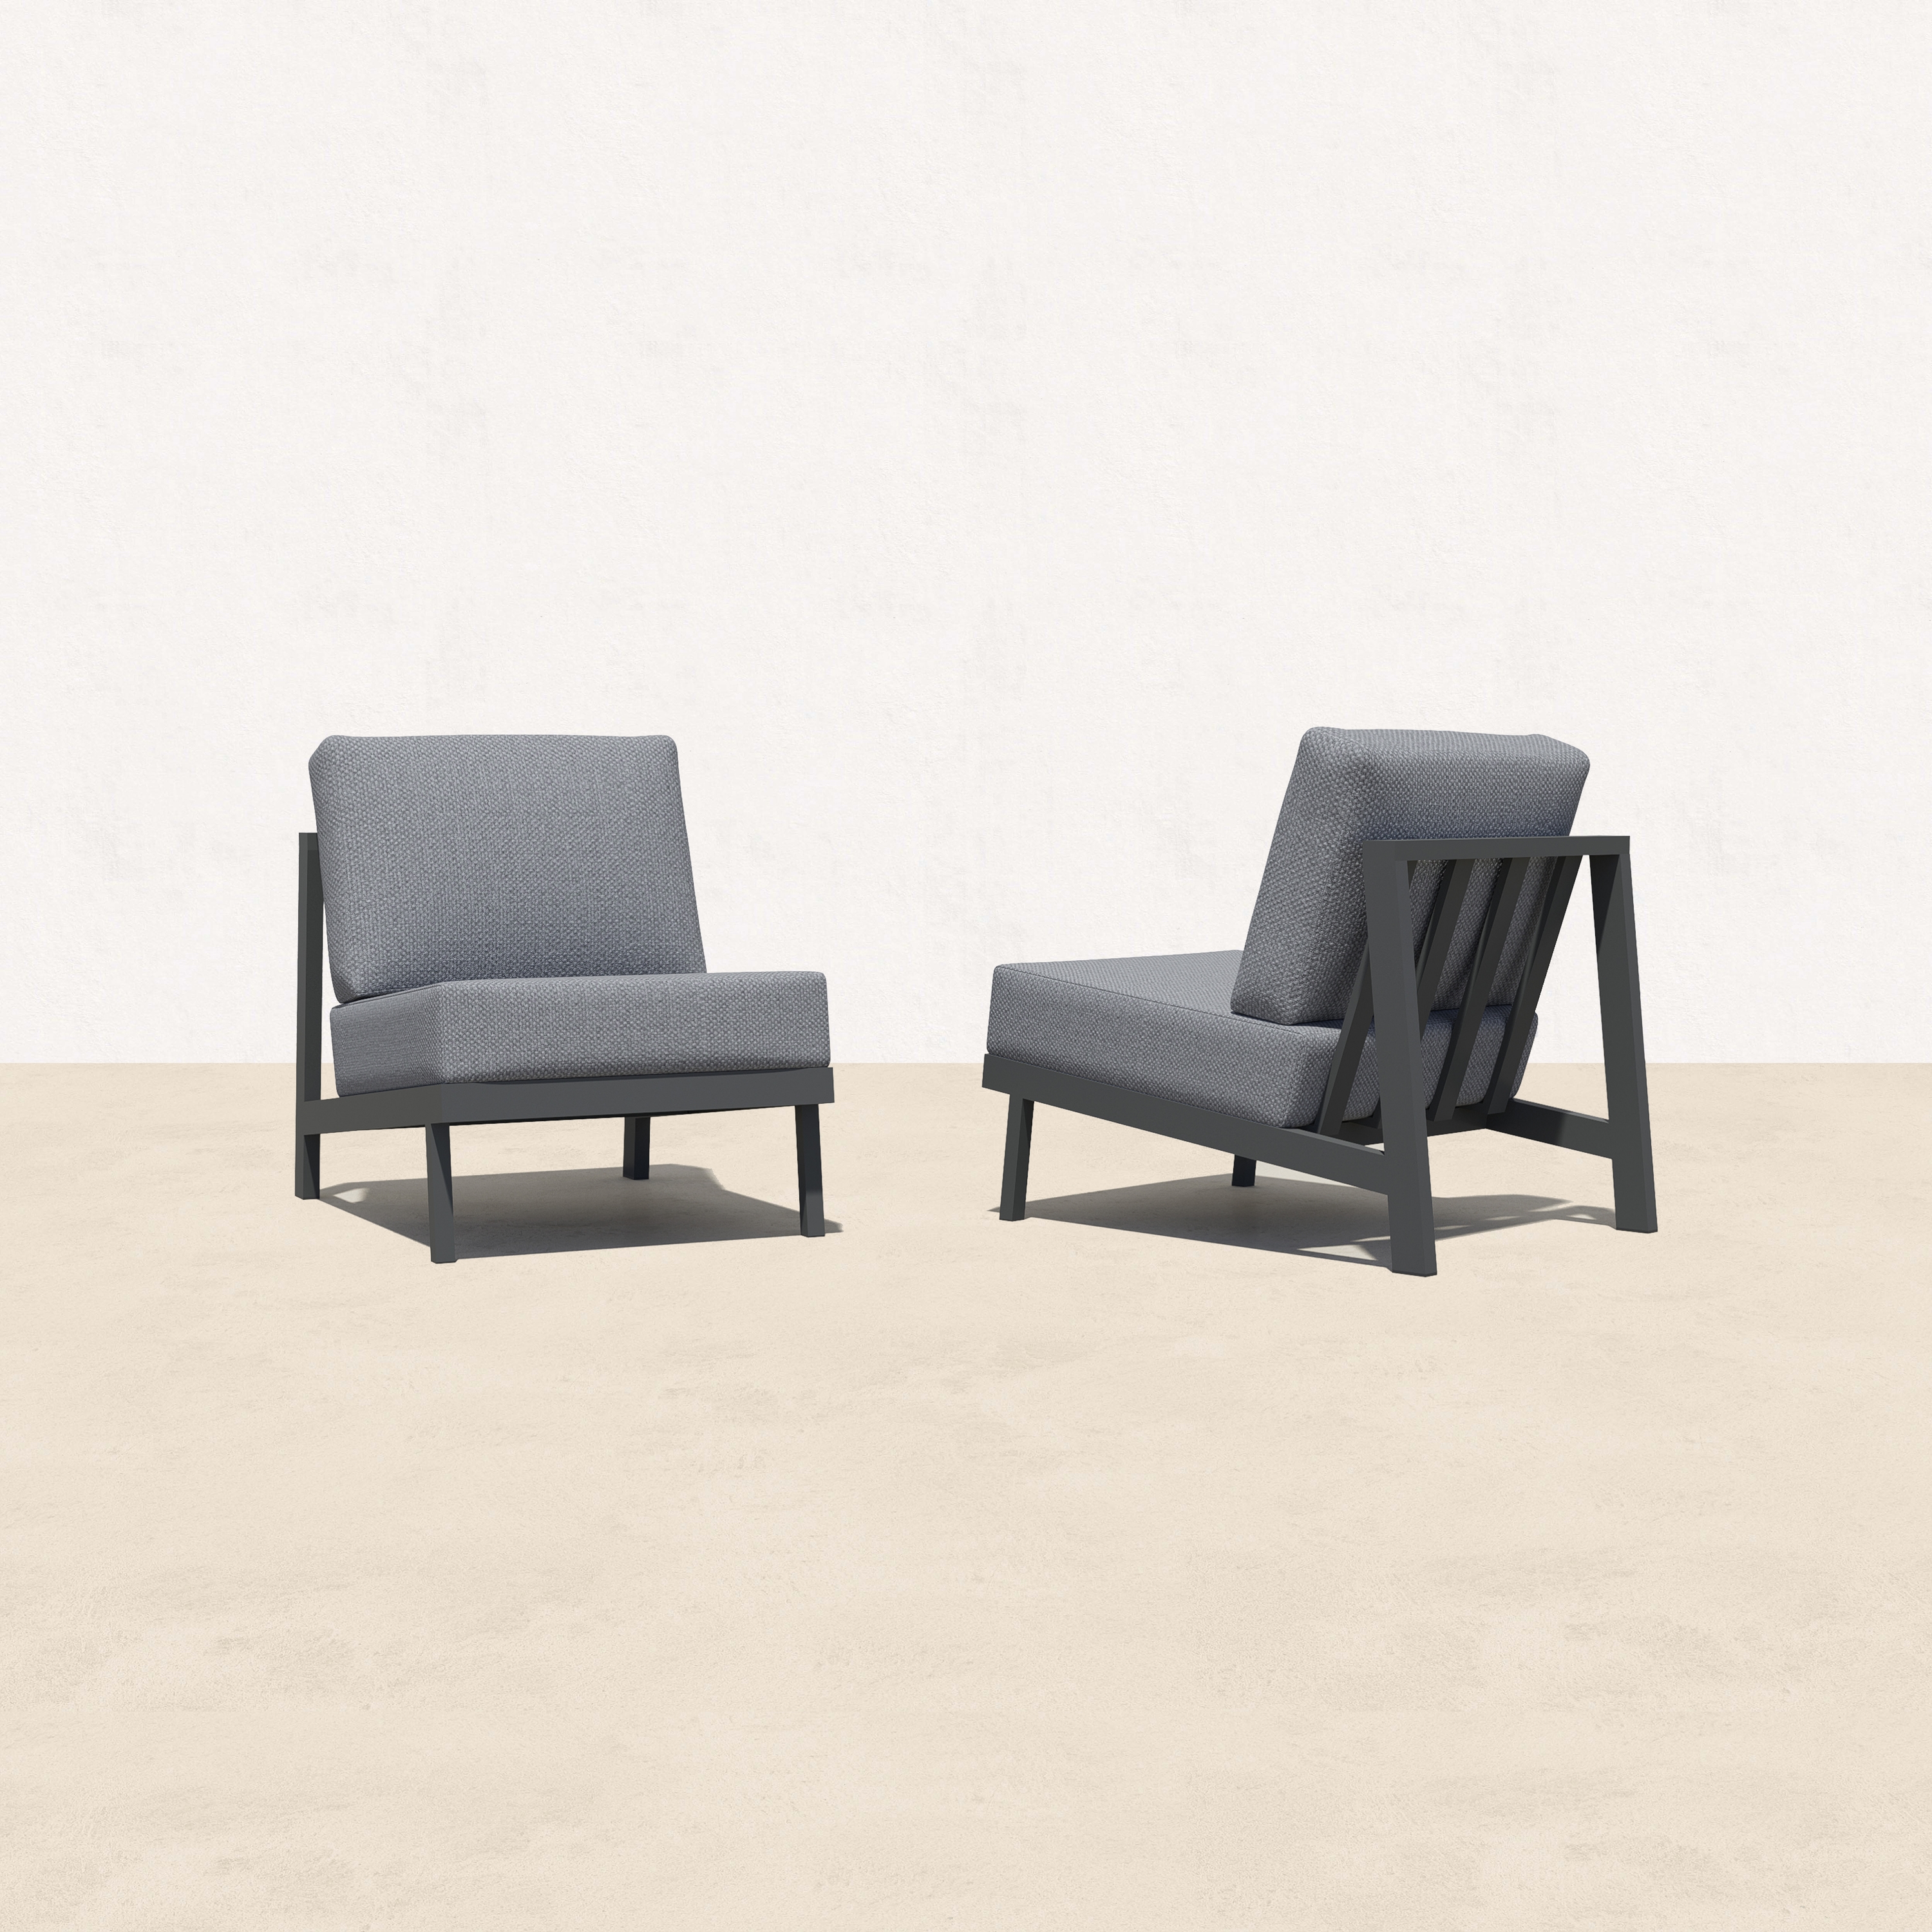 KATE Aluminum Outdoor Armless Chair Conversation Set